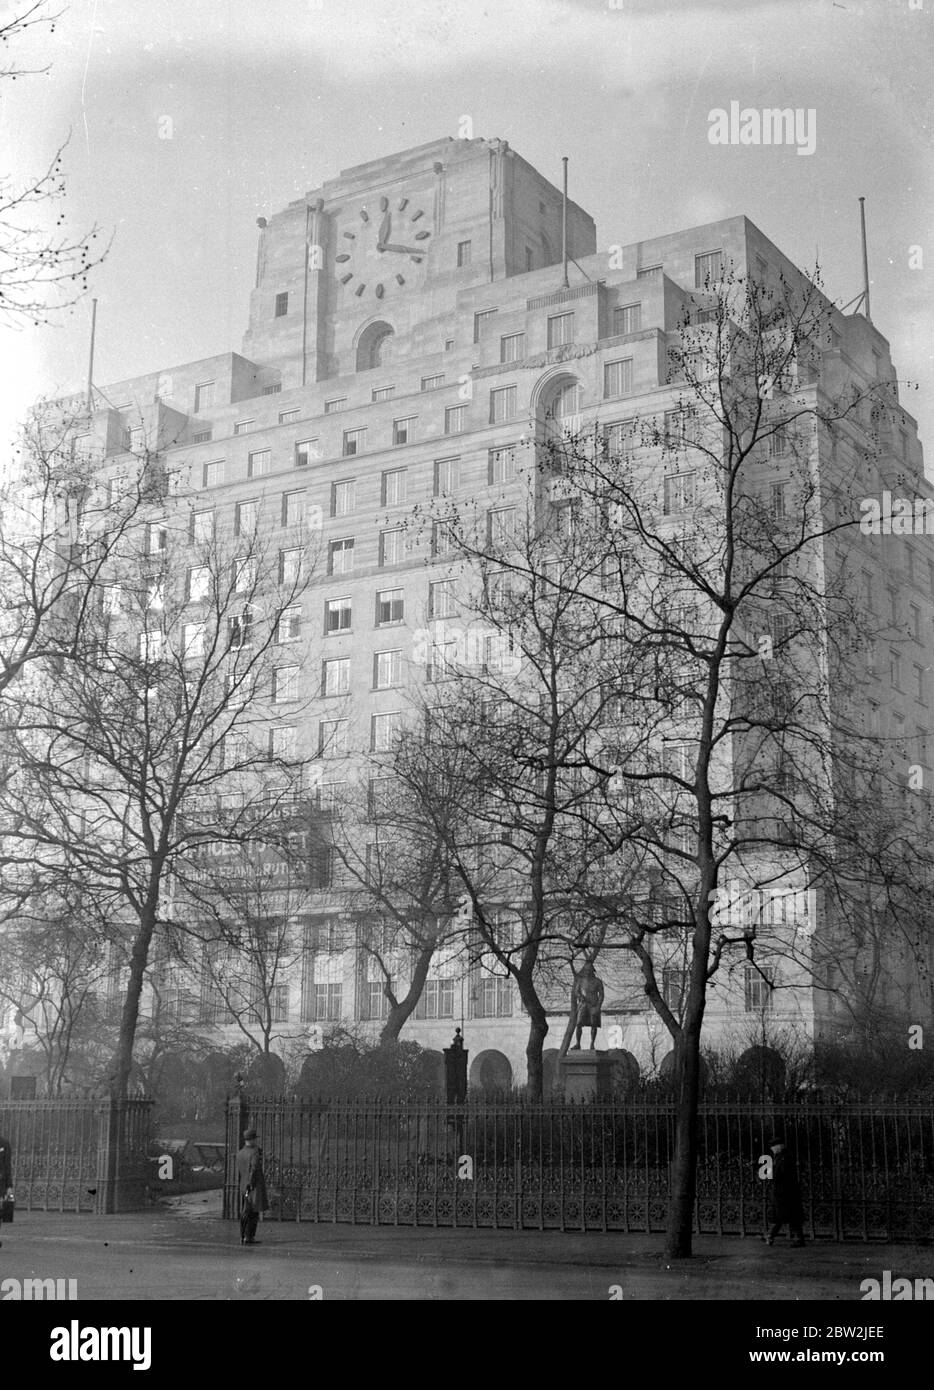 Shell-Mex House, London. 14 Dezember 1932 Stockfoto